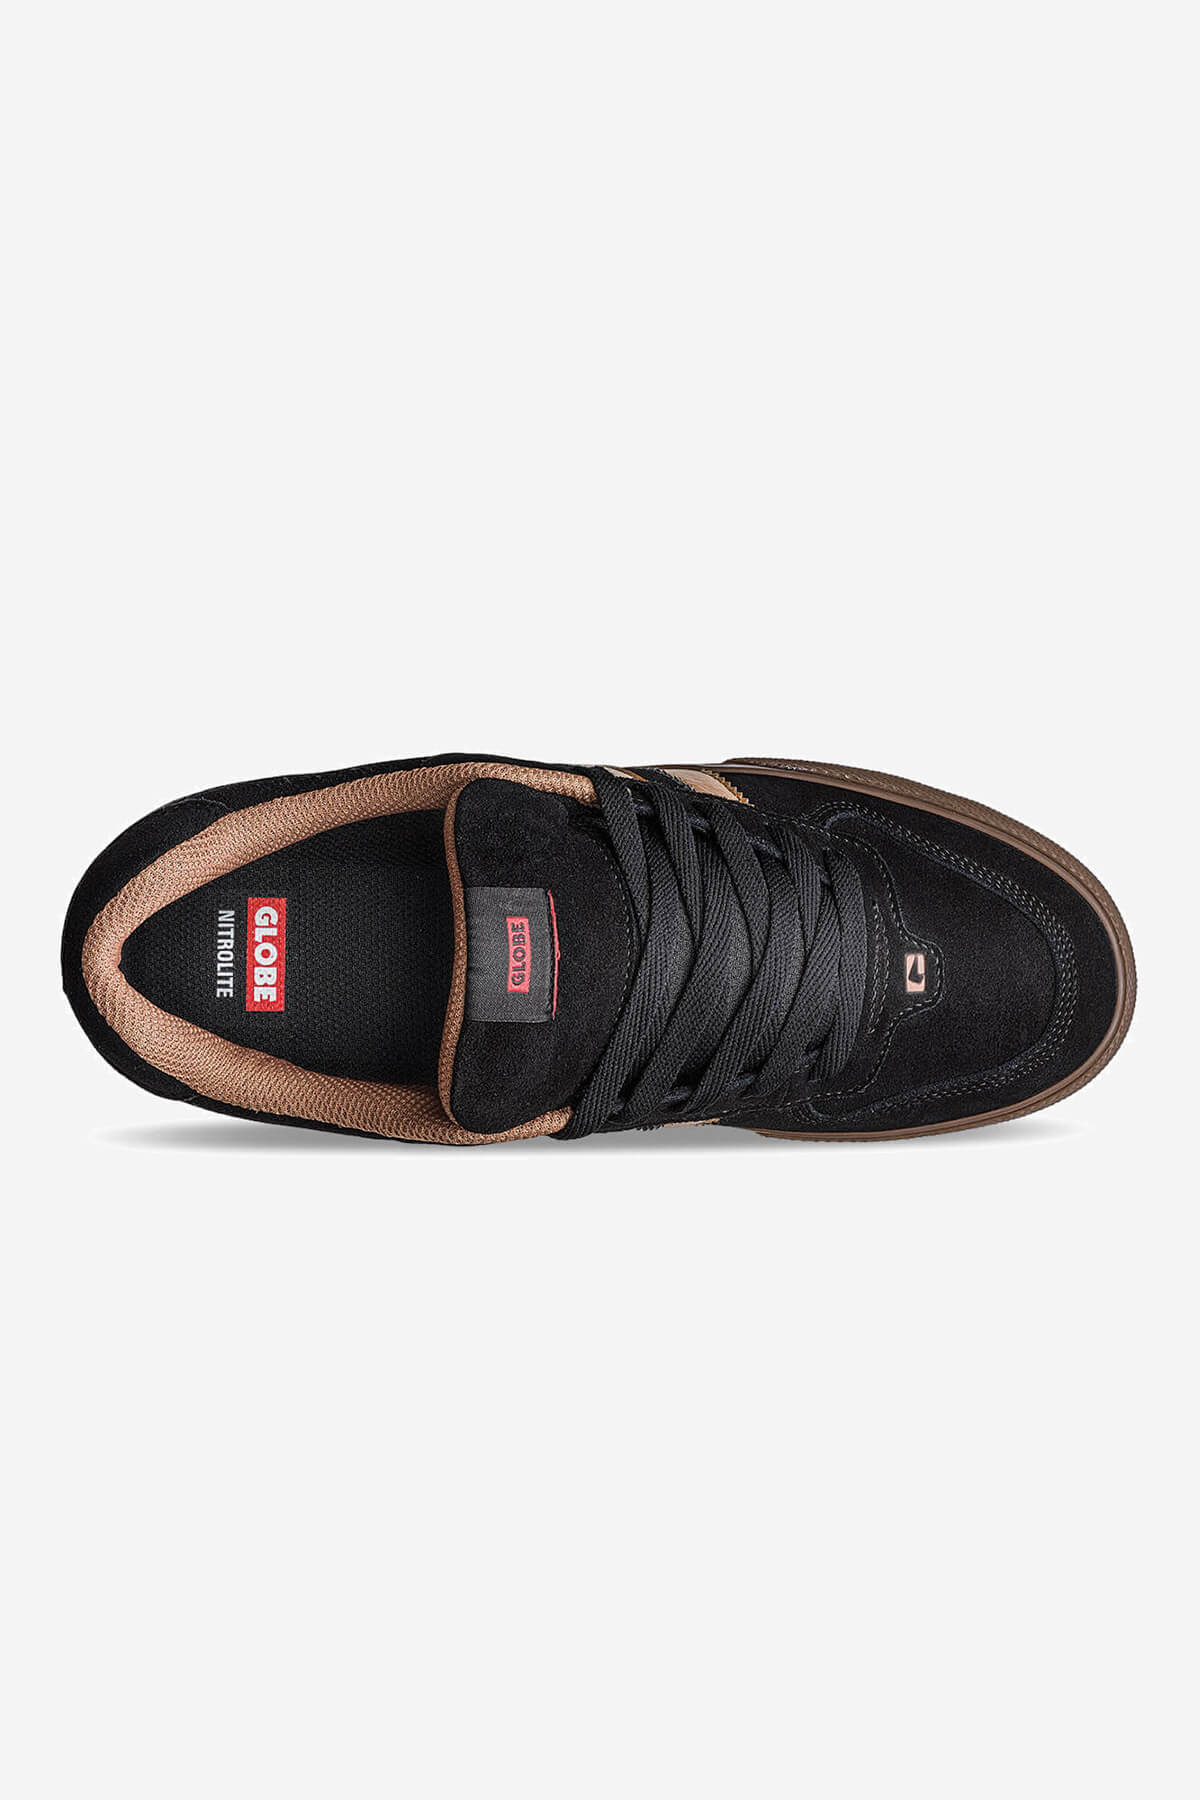 Globe - Encore 2 - Black/Brown - skateboard Chaussures